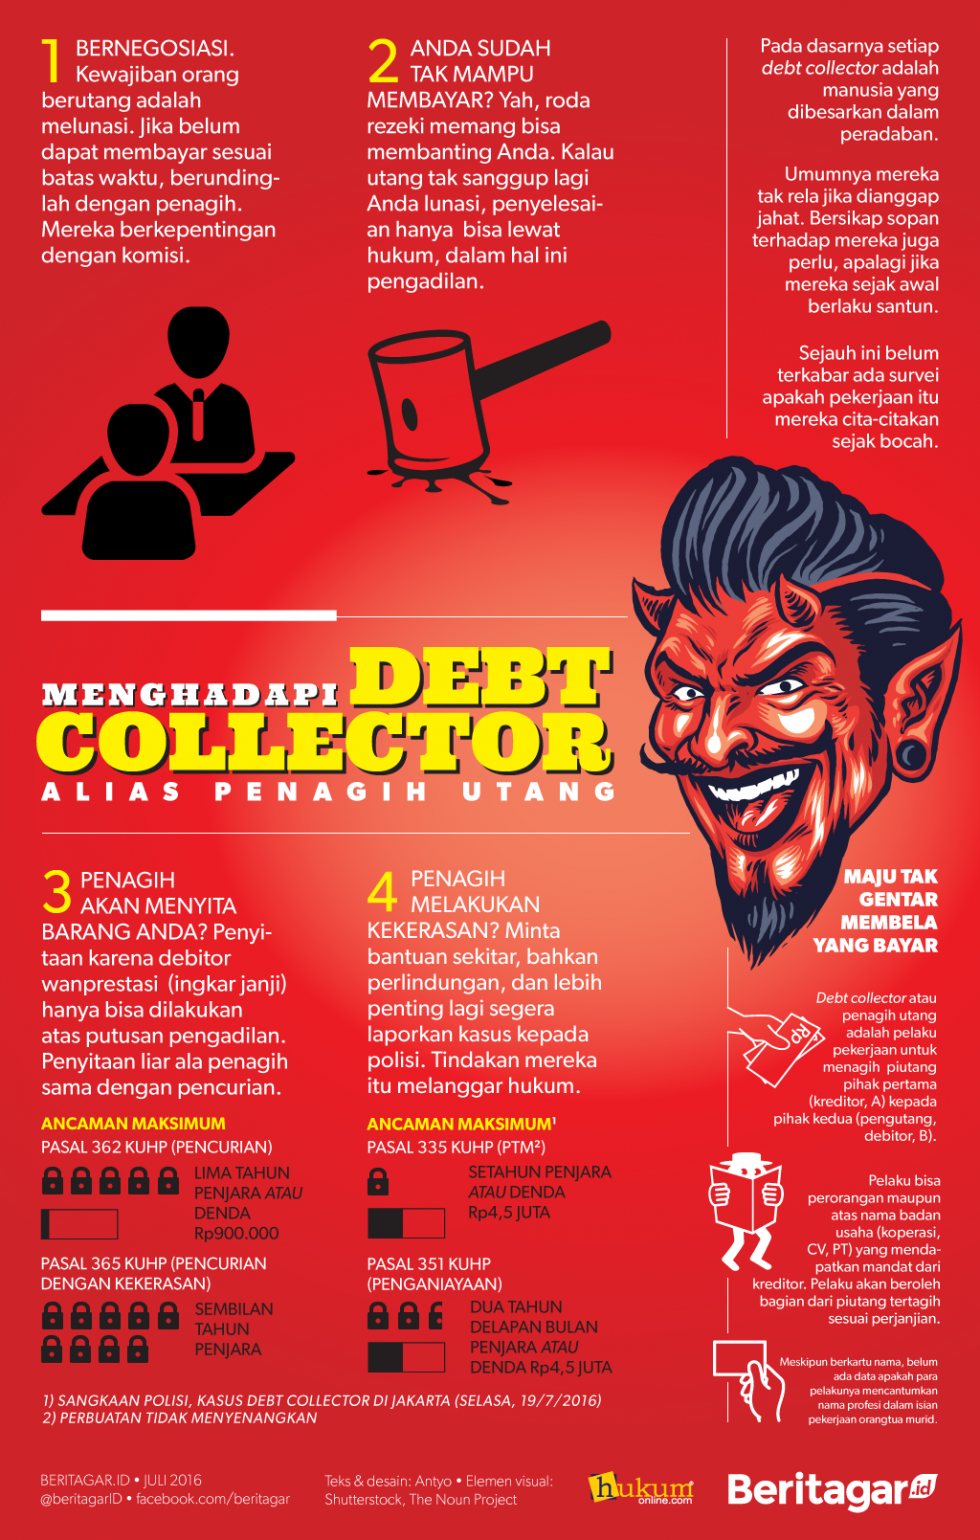 Menghadapi debt collector kasar